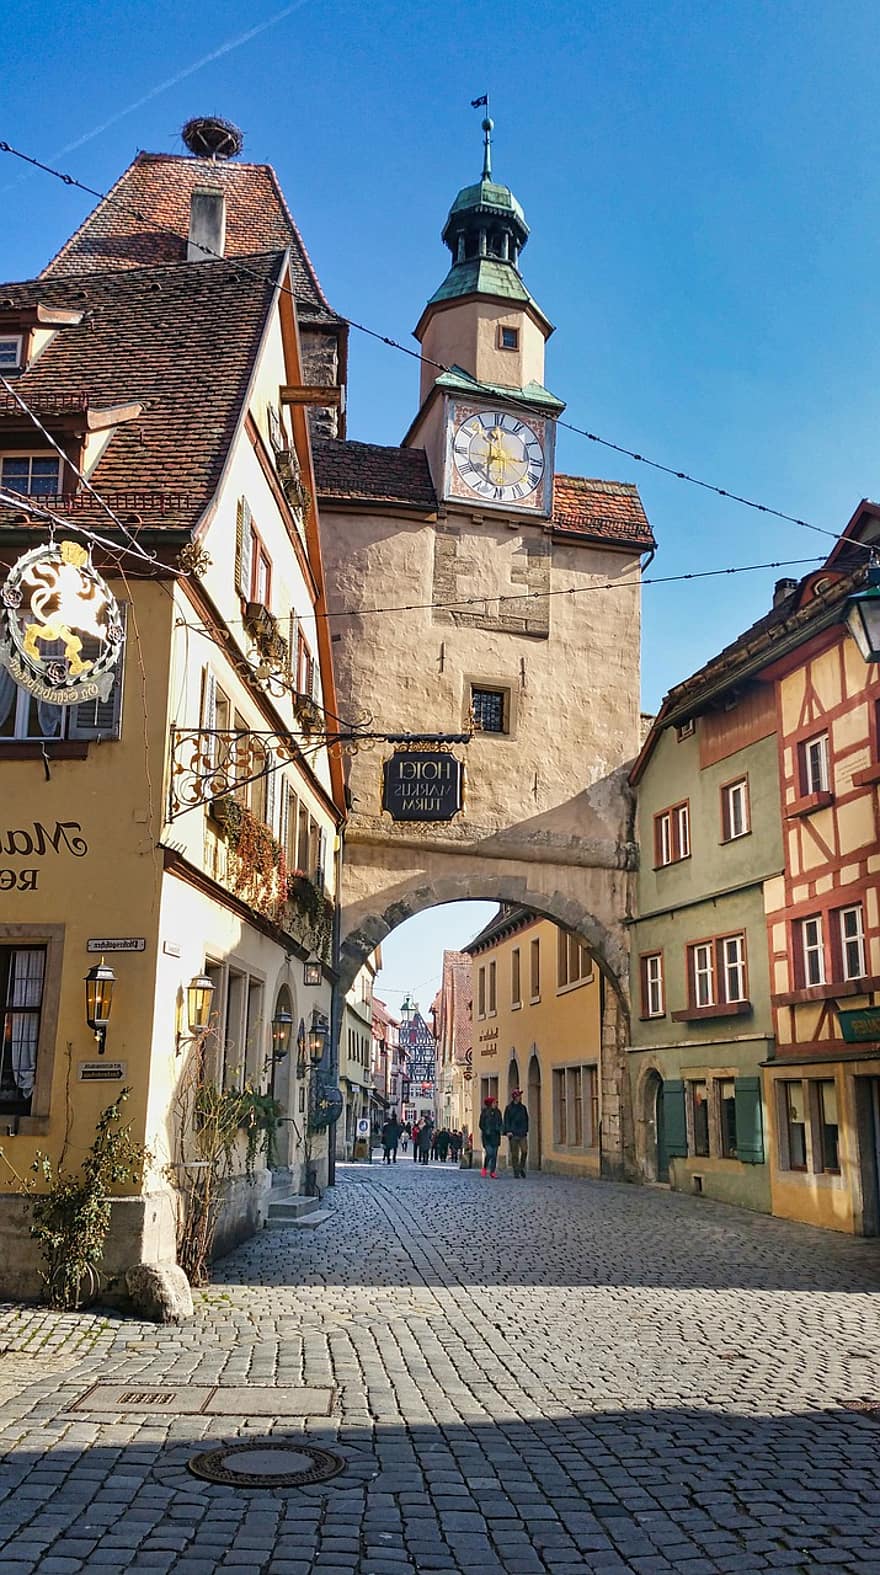 rothenburg ob der tauber, градска порта, улица, сгради, къщи, арка, стар град, часовник, кула, архитектура, исторически